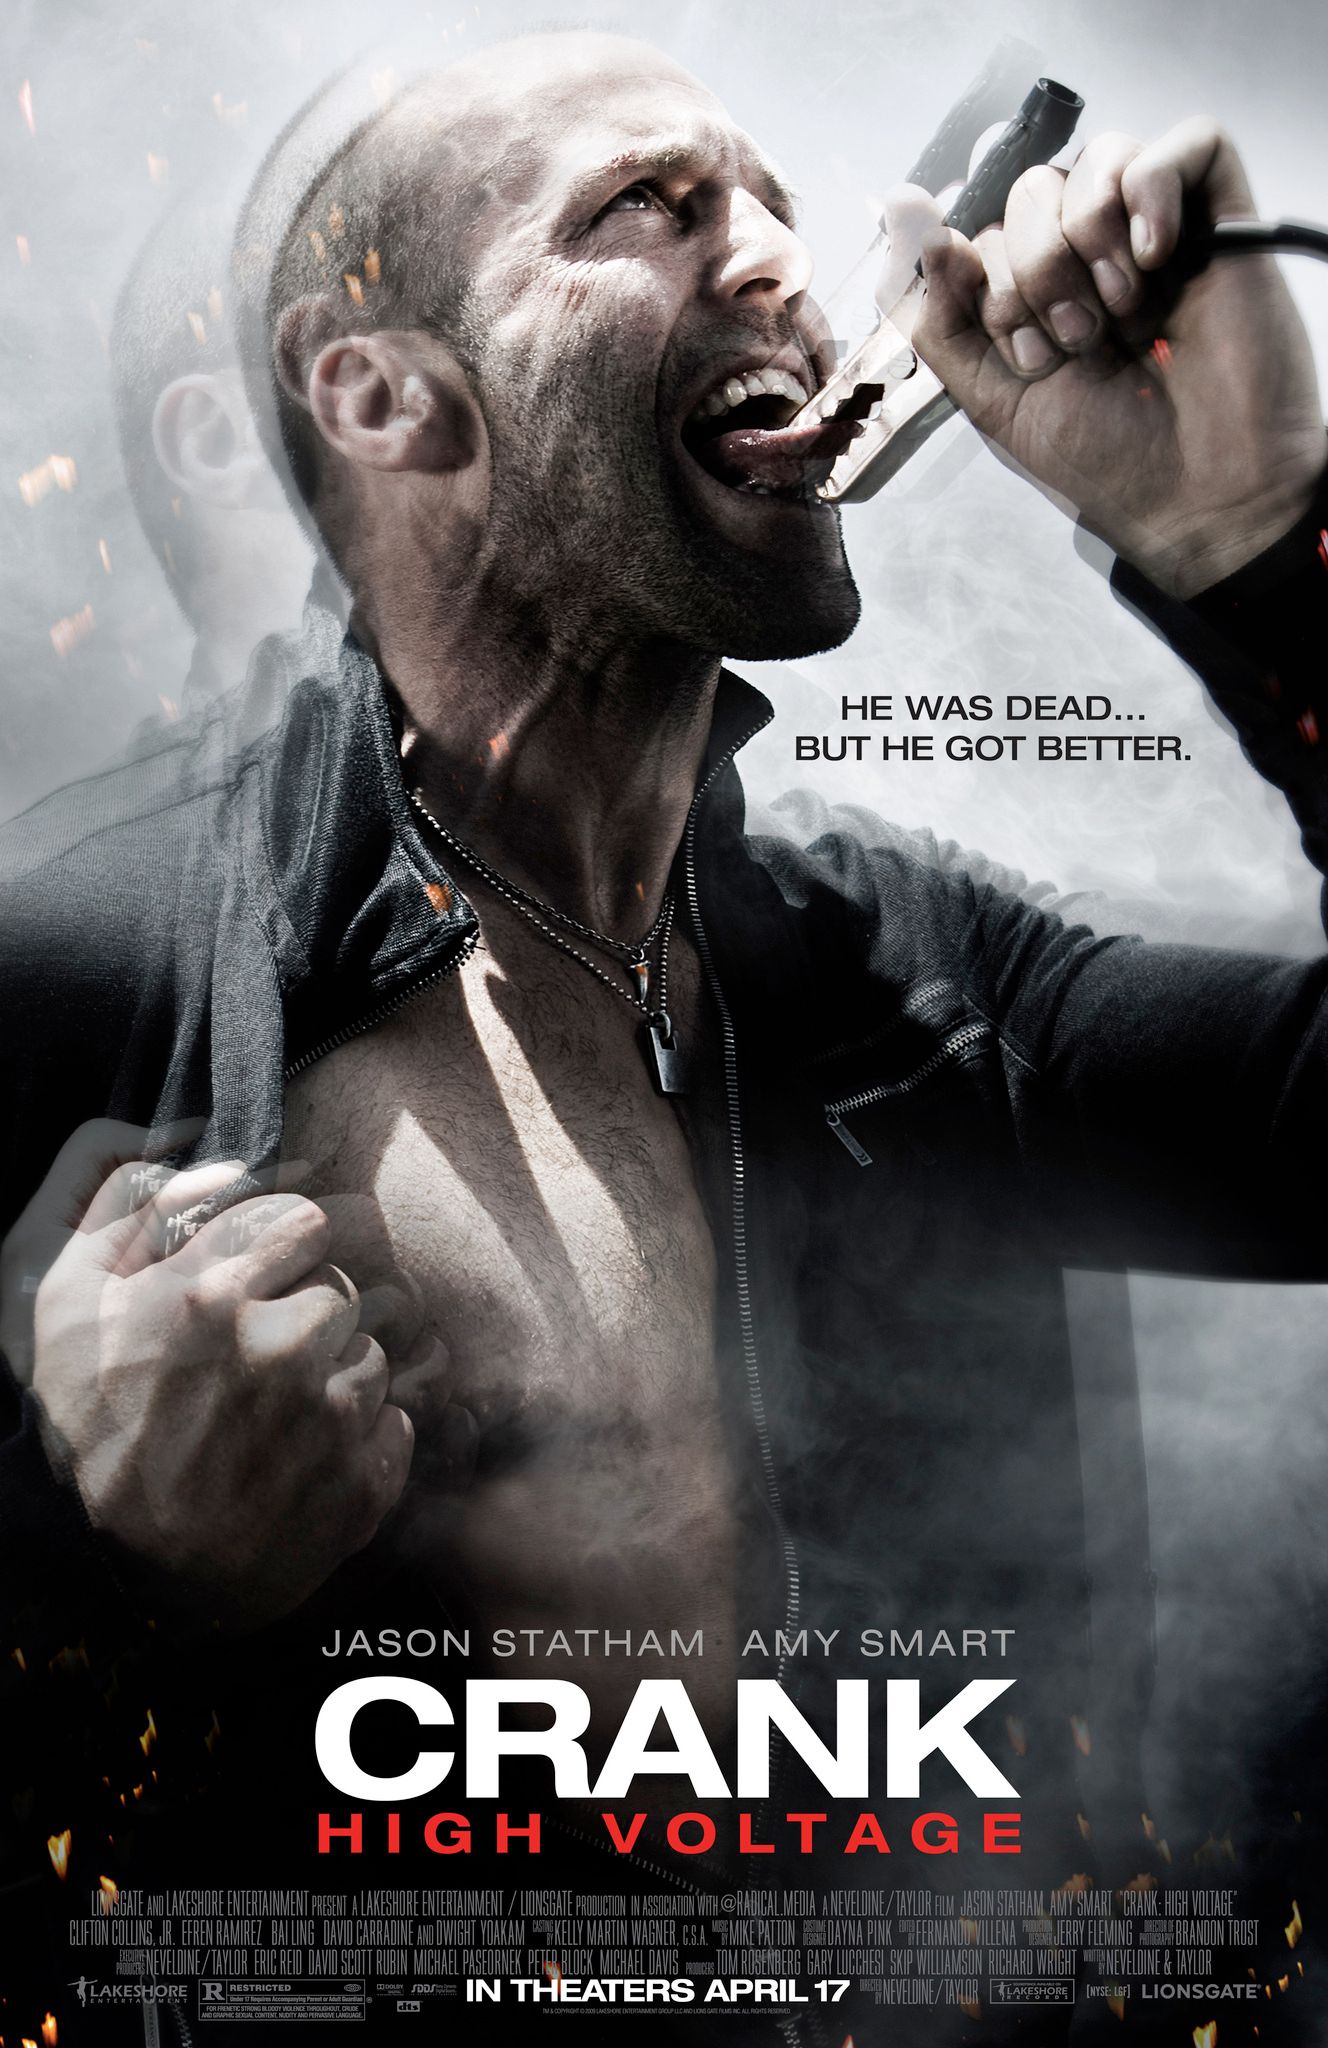 Jason Statham on the Crank movie poster